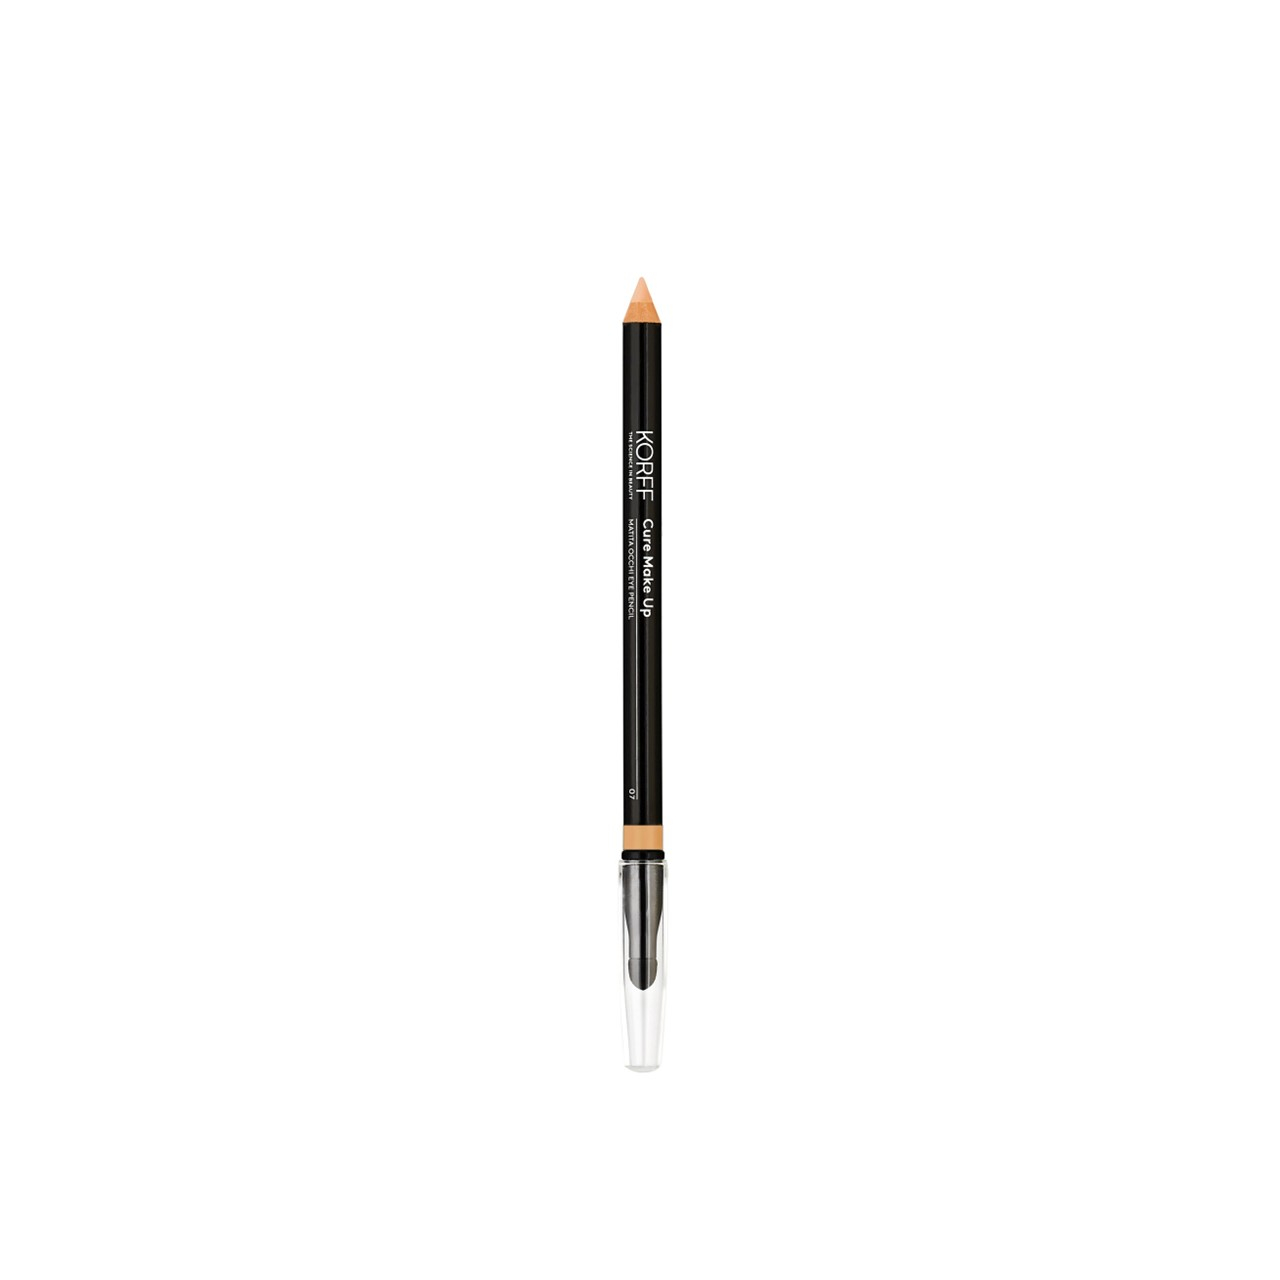 Korff Cure Make-Up Eye Pencil 07 1.1g (0.039 oz)